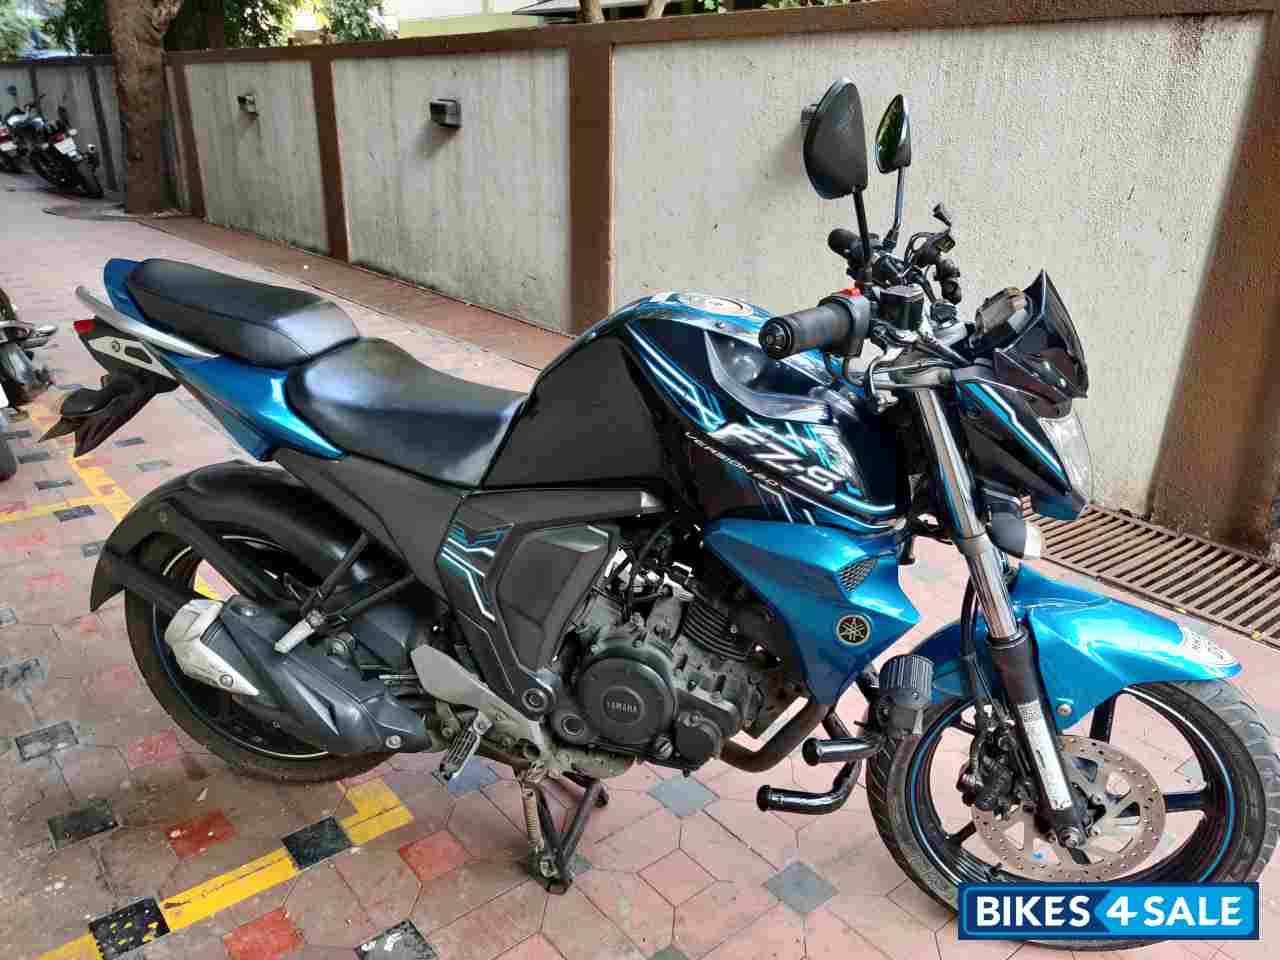 Used 2015 model Yamaha FZ-S FI V2 for sale in Mumbai. ID 296333. Blue ...